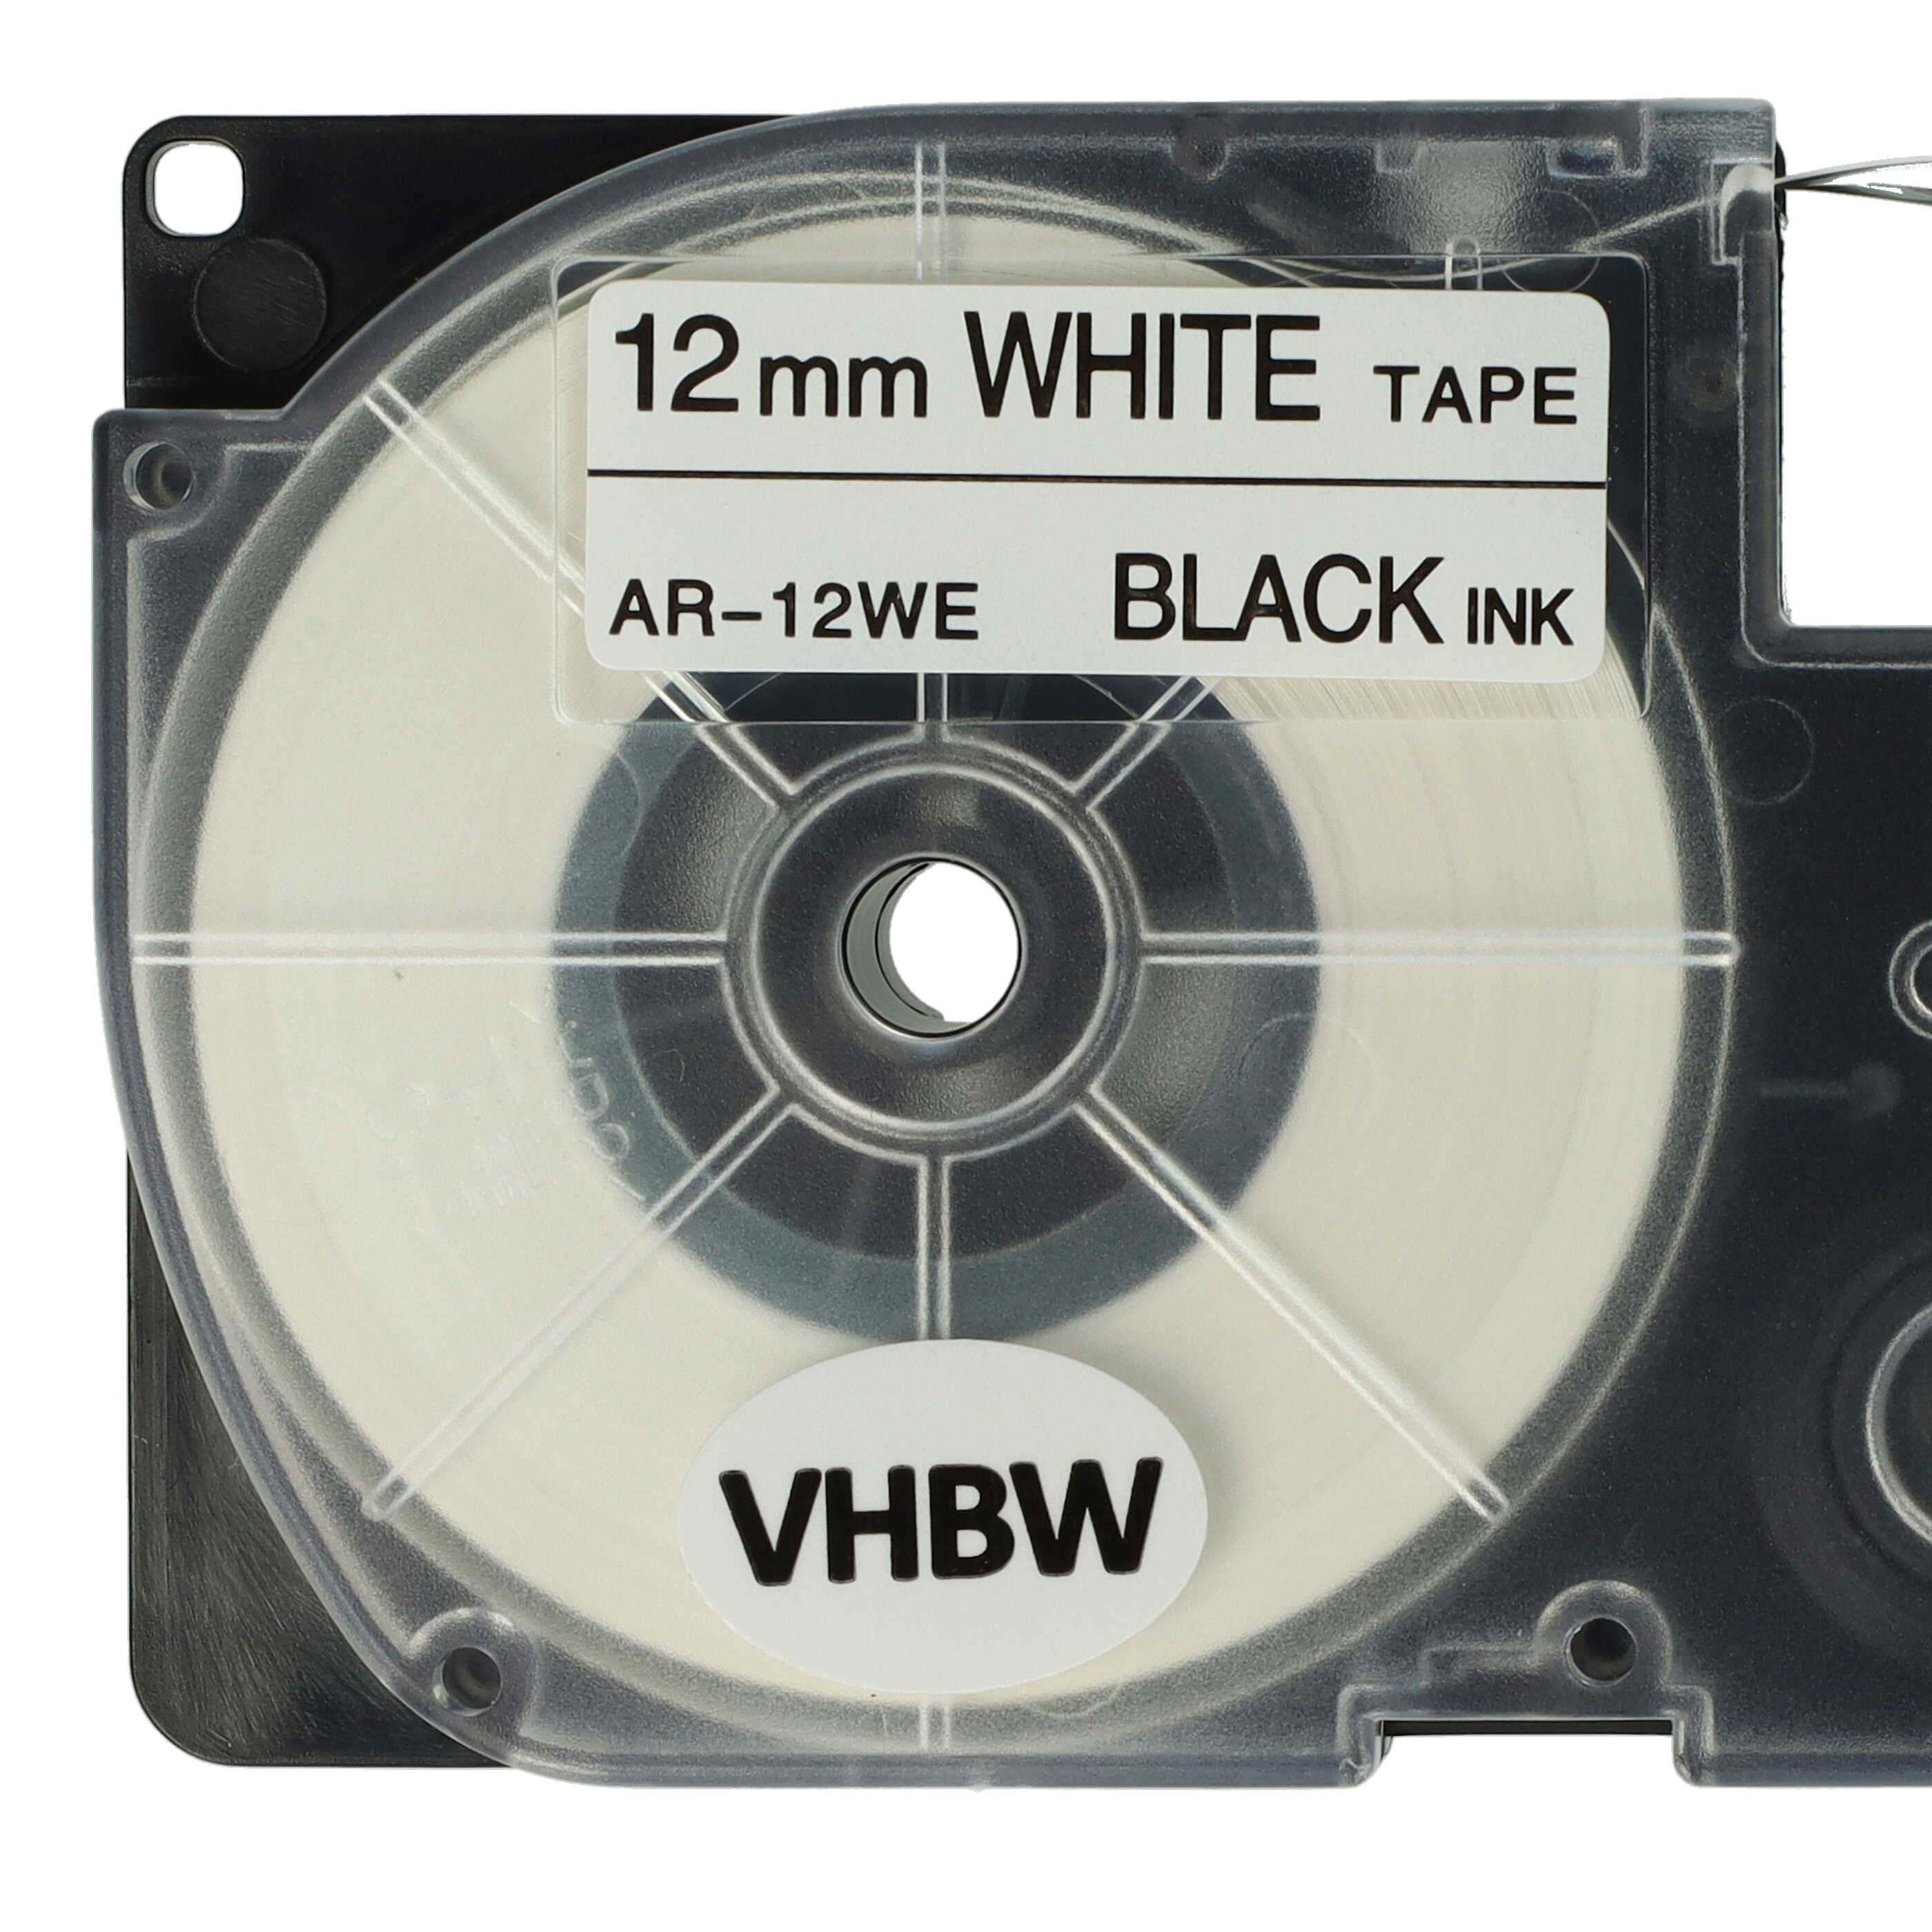 3x Casete cinta escritura reemplaza Casio XR-12WE, XR-12WE1 Negro su Blanco